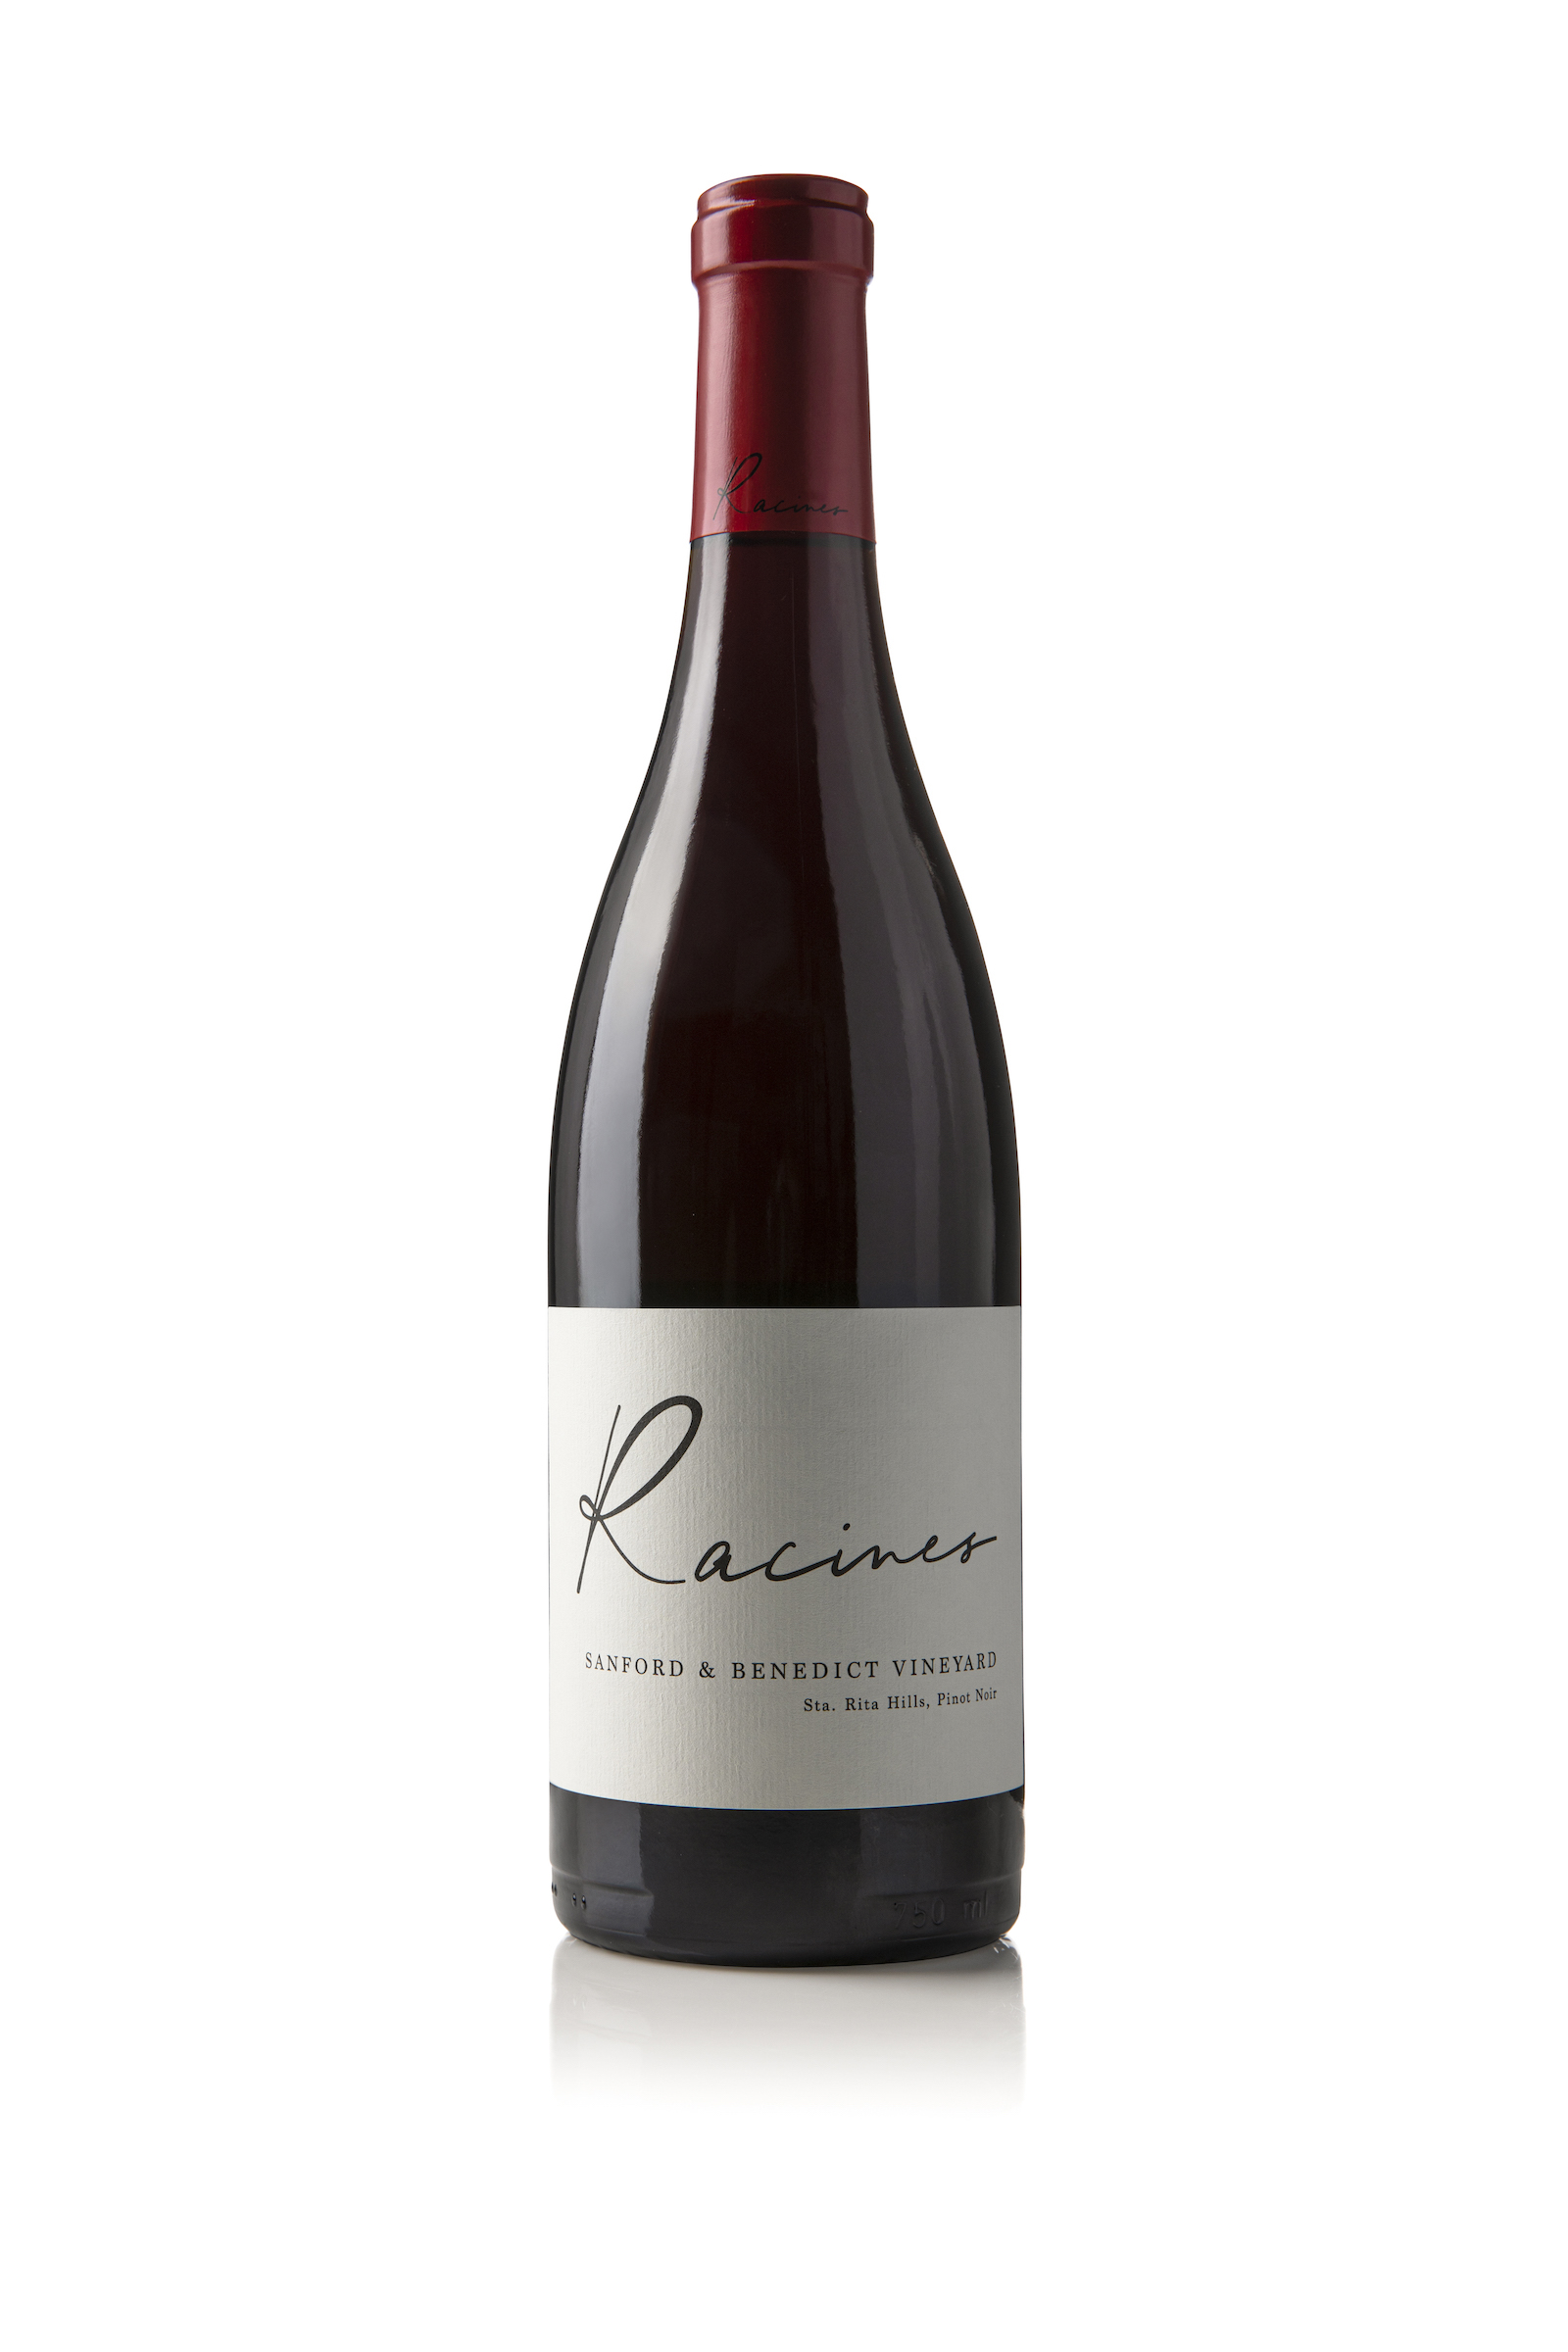 Bottle of Racines Sanford & Benedict Vineyard Sta. Rita Hills Pinot Noir